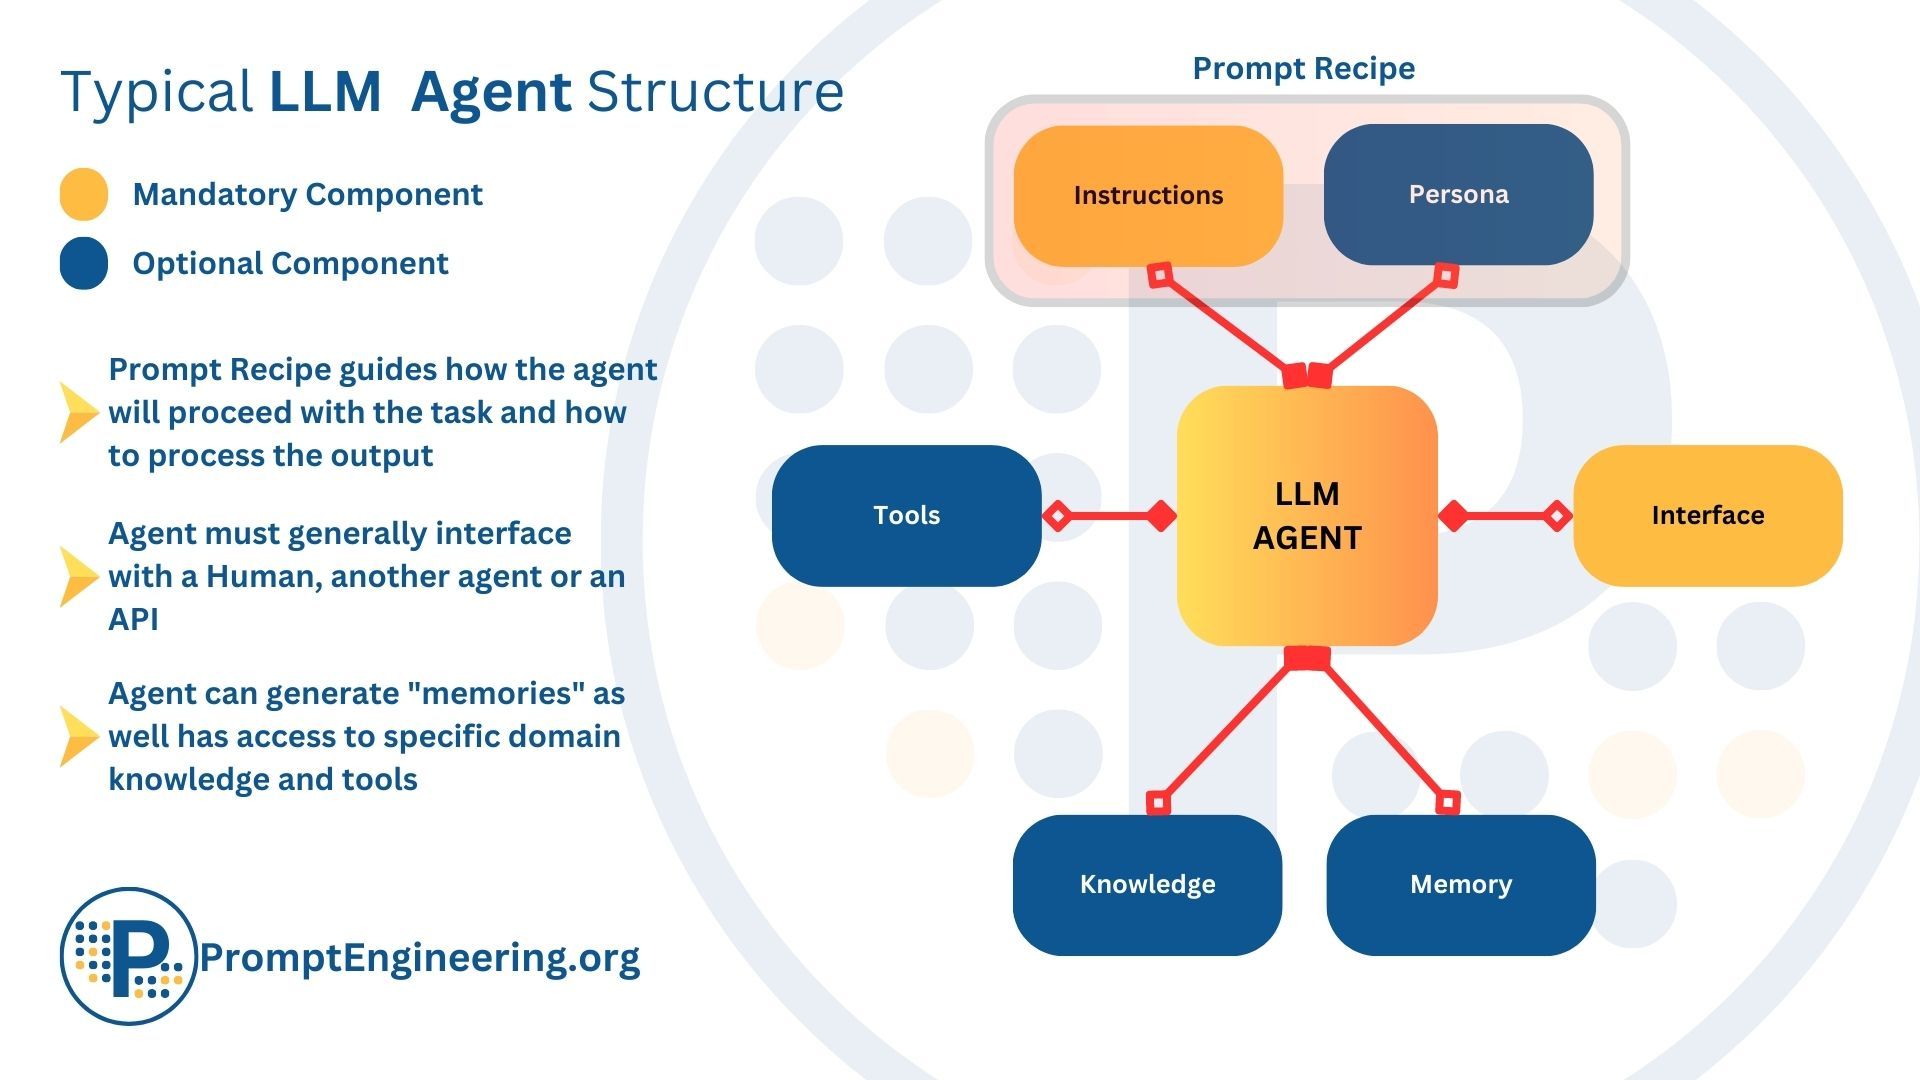 AGI Alignment Experiments: Foundation vs INSTRUCT, various Agent